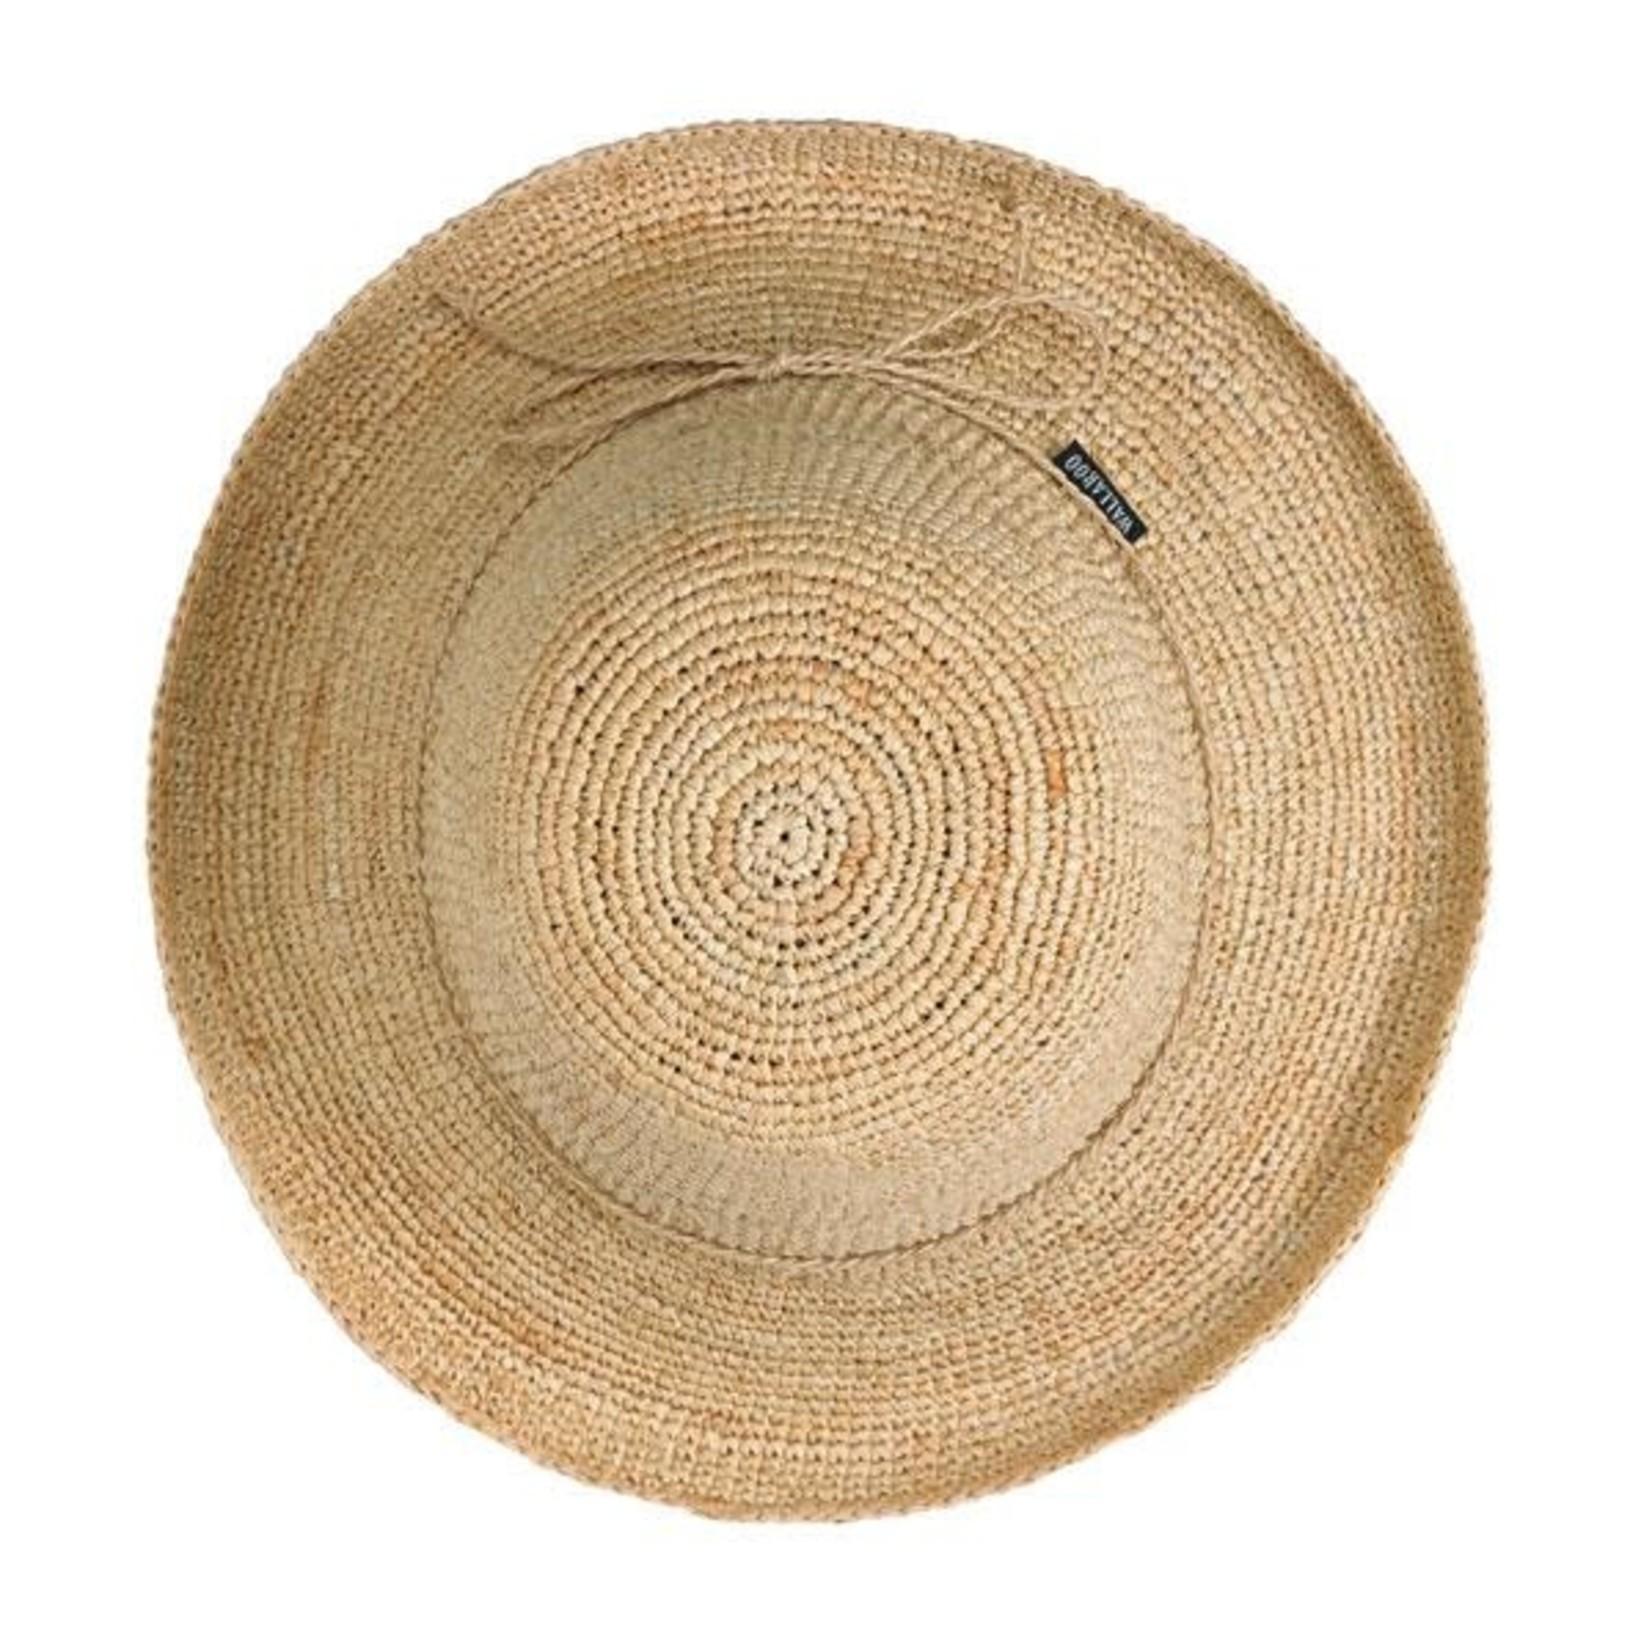 Catalina Hat